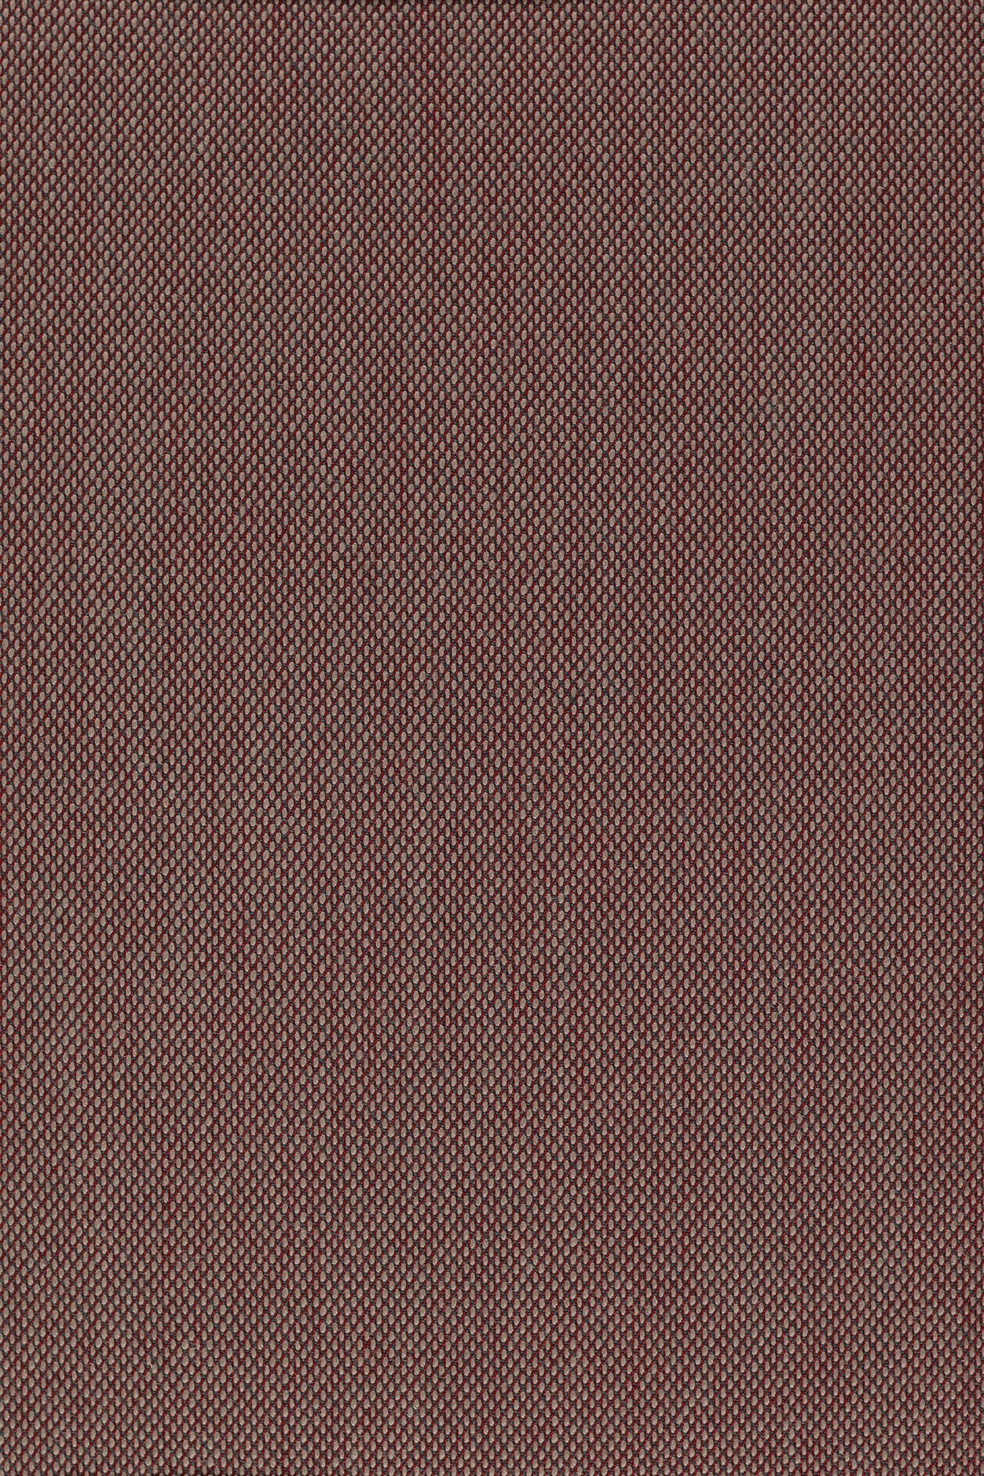 Fabric sample Steelcut Trio 3 645 brown